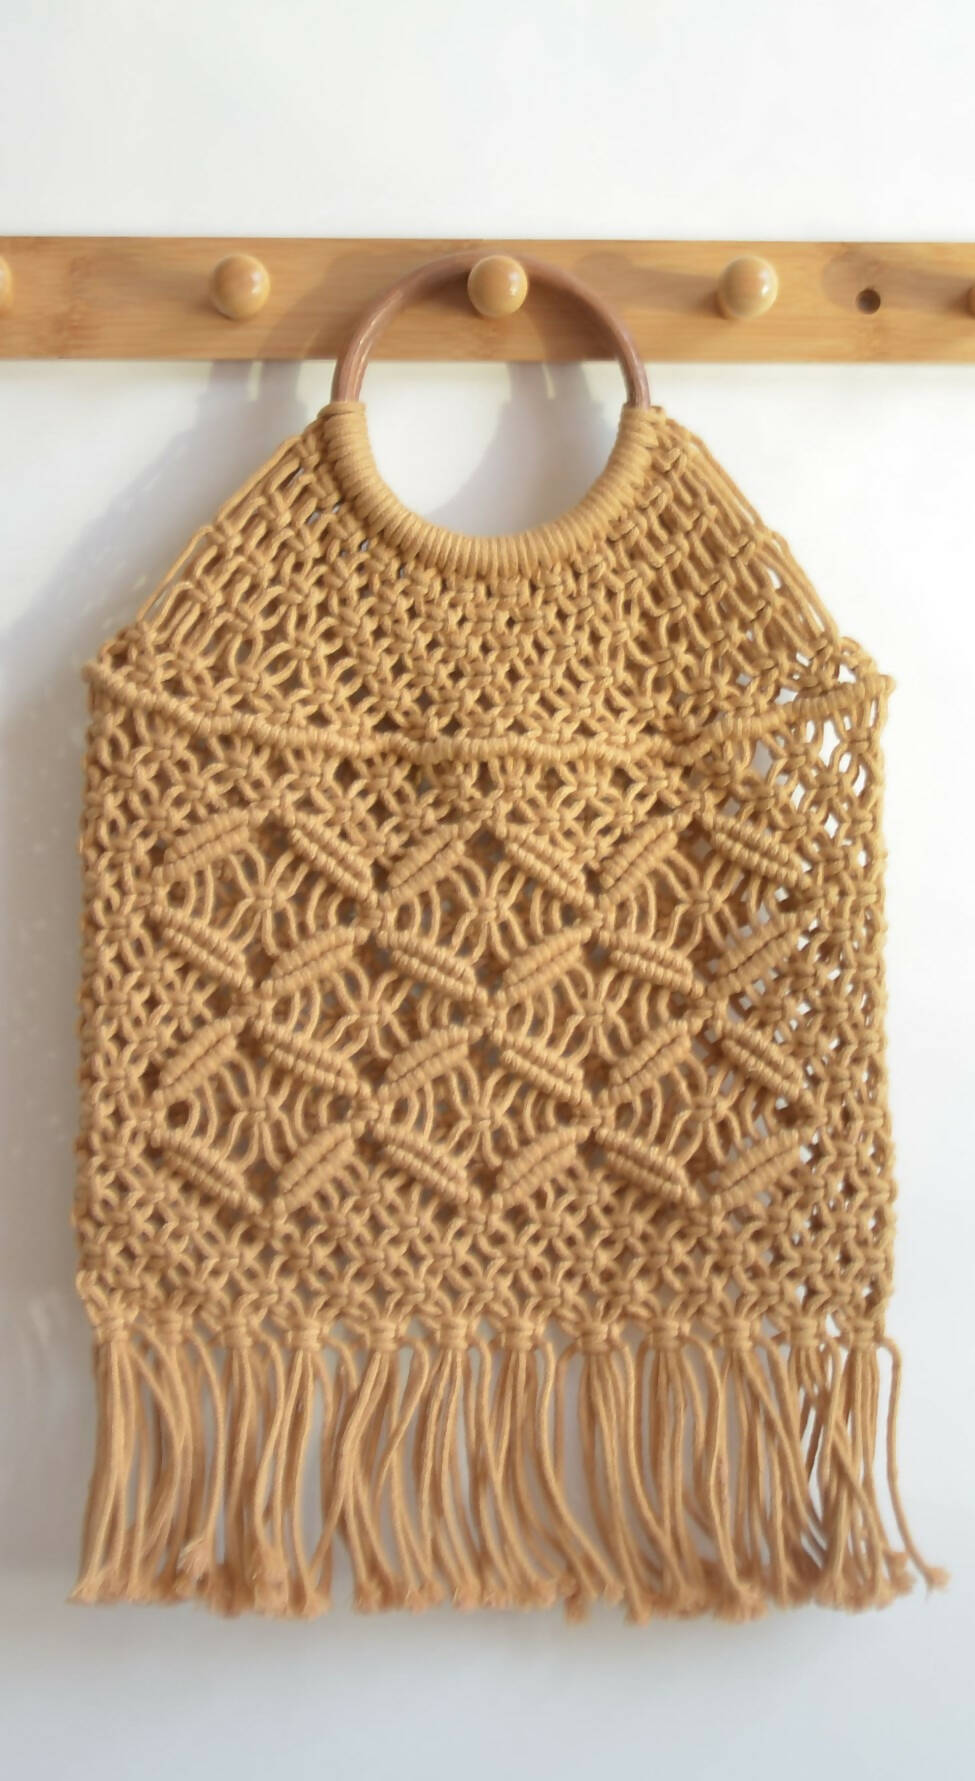 Handmade Macrame Bag with Wooden Handle and Tassel design #19